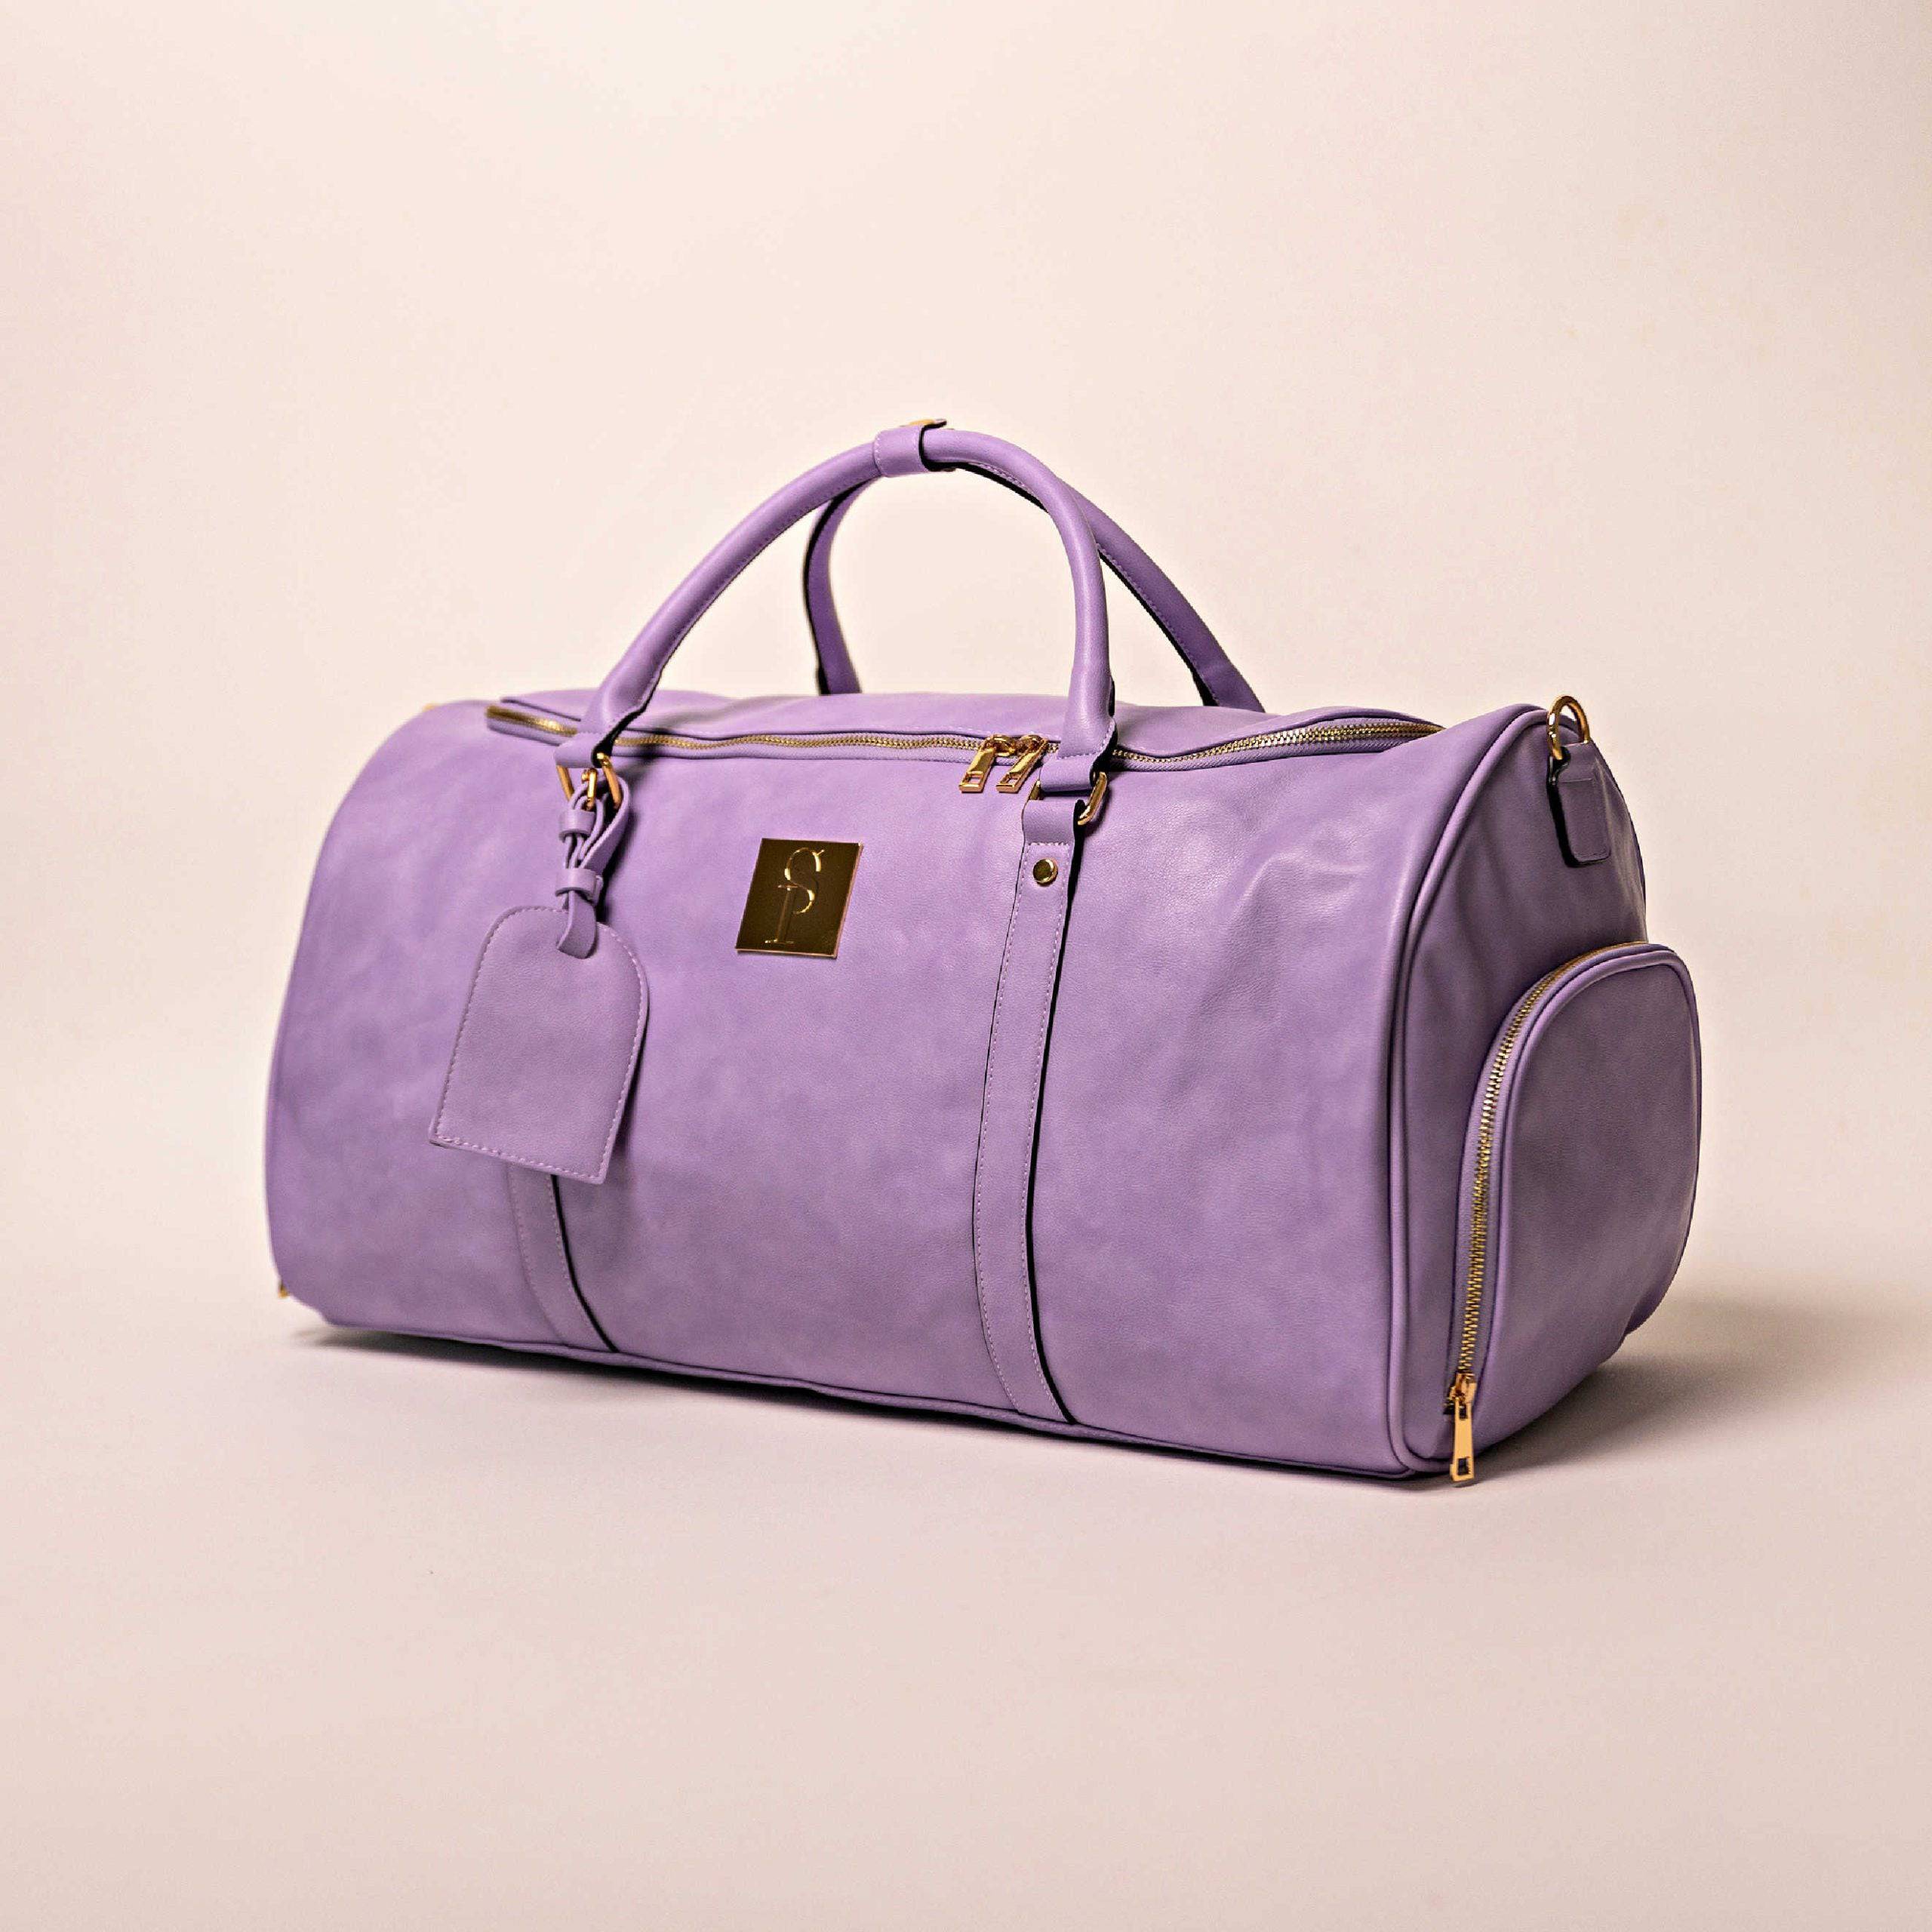 Maxx New York Purple Leather Purse | Leather purses, Purple leather, Leather